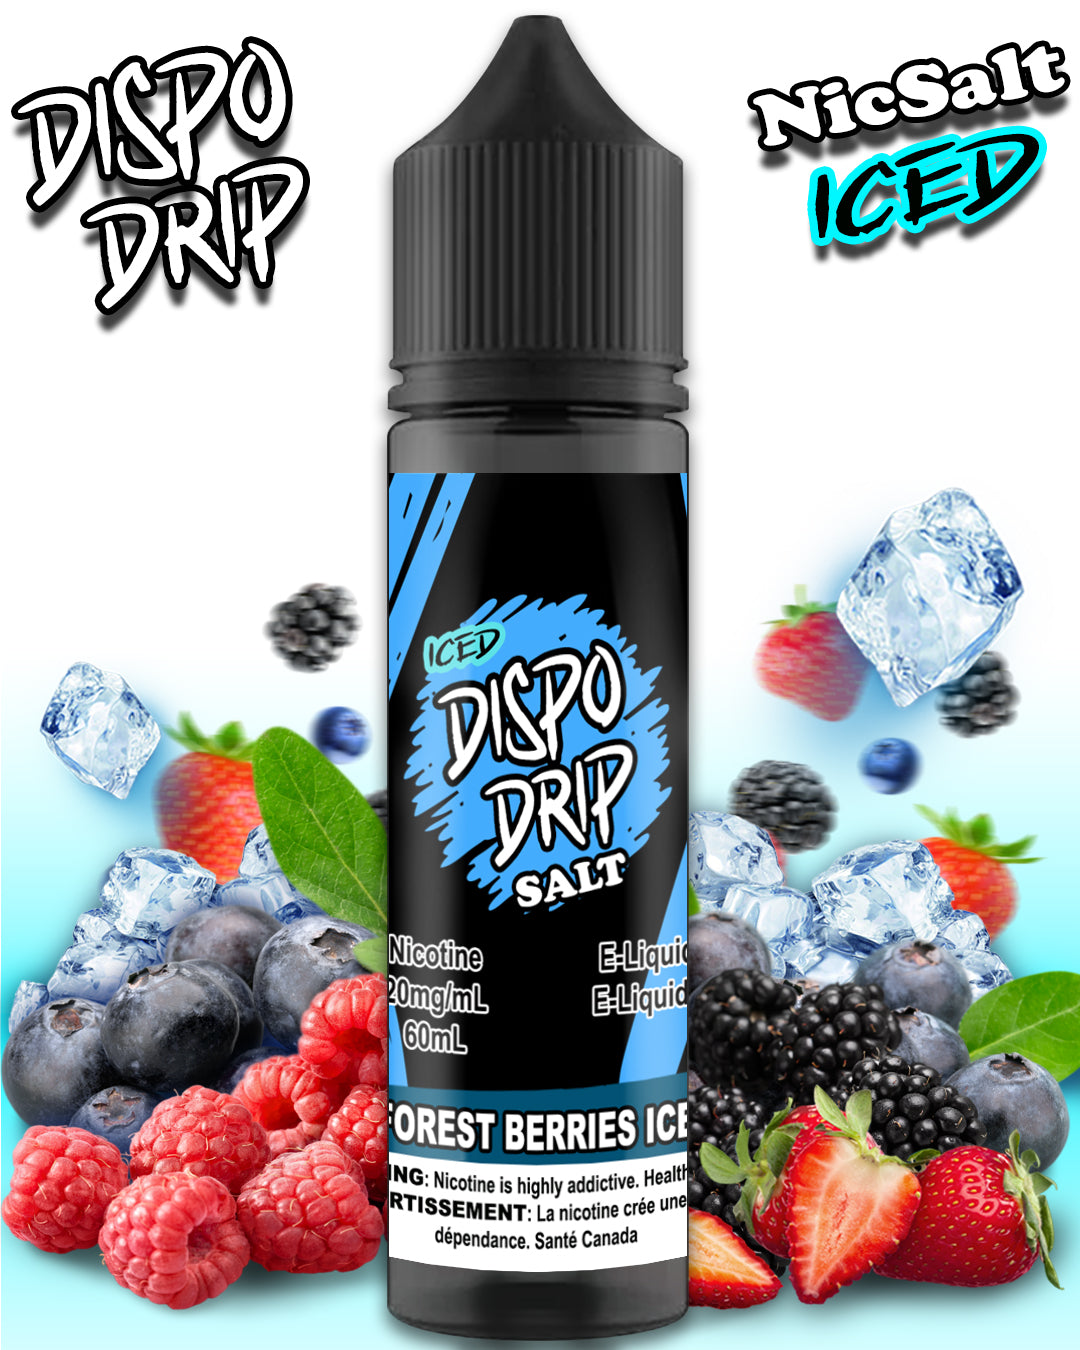 DISPO DRIP ICED - FOREST BERRIES ICE SALT